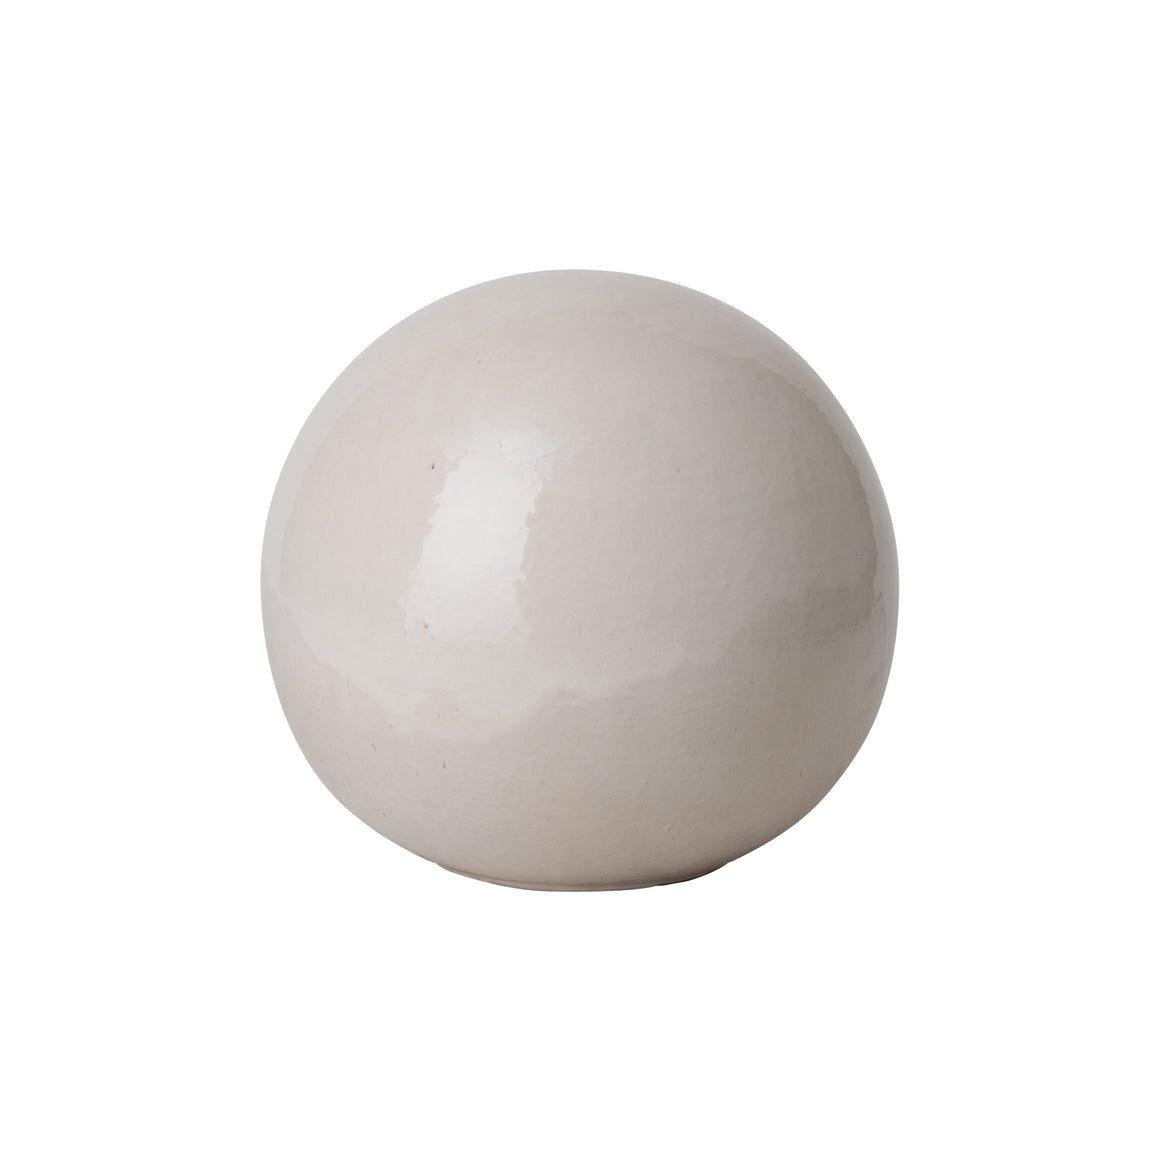 Landscape Gazing Ball - 20 inch White Glaze